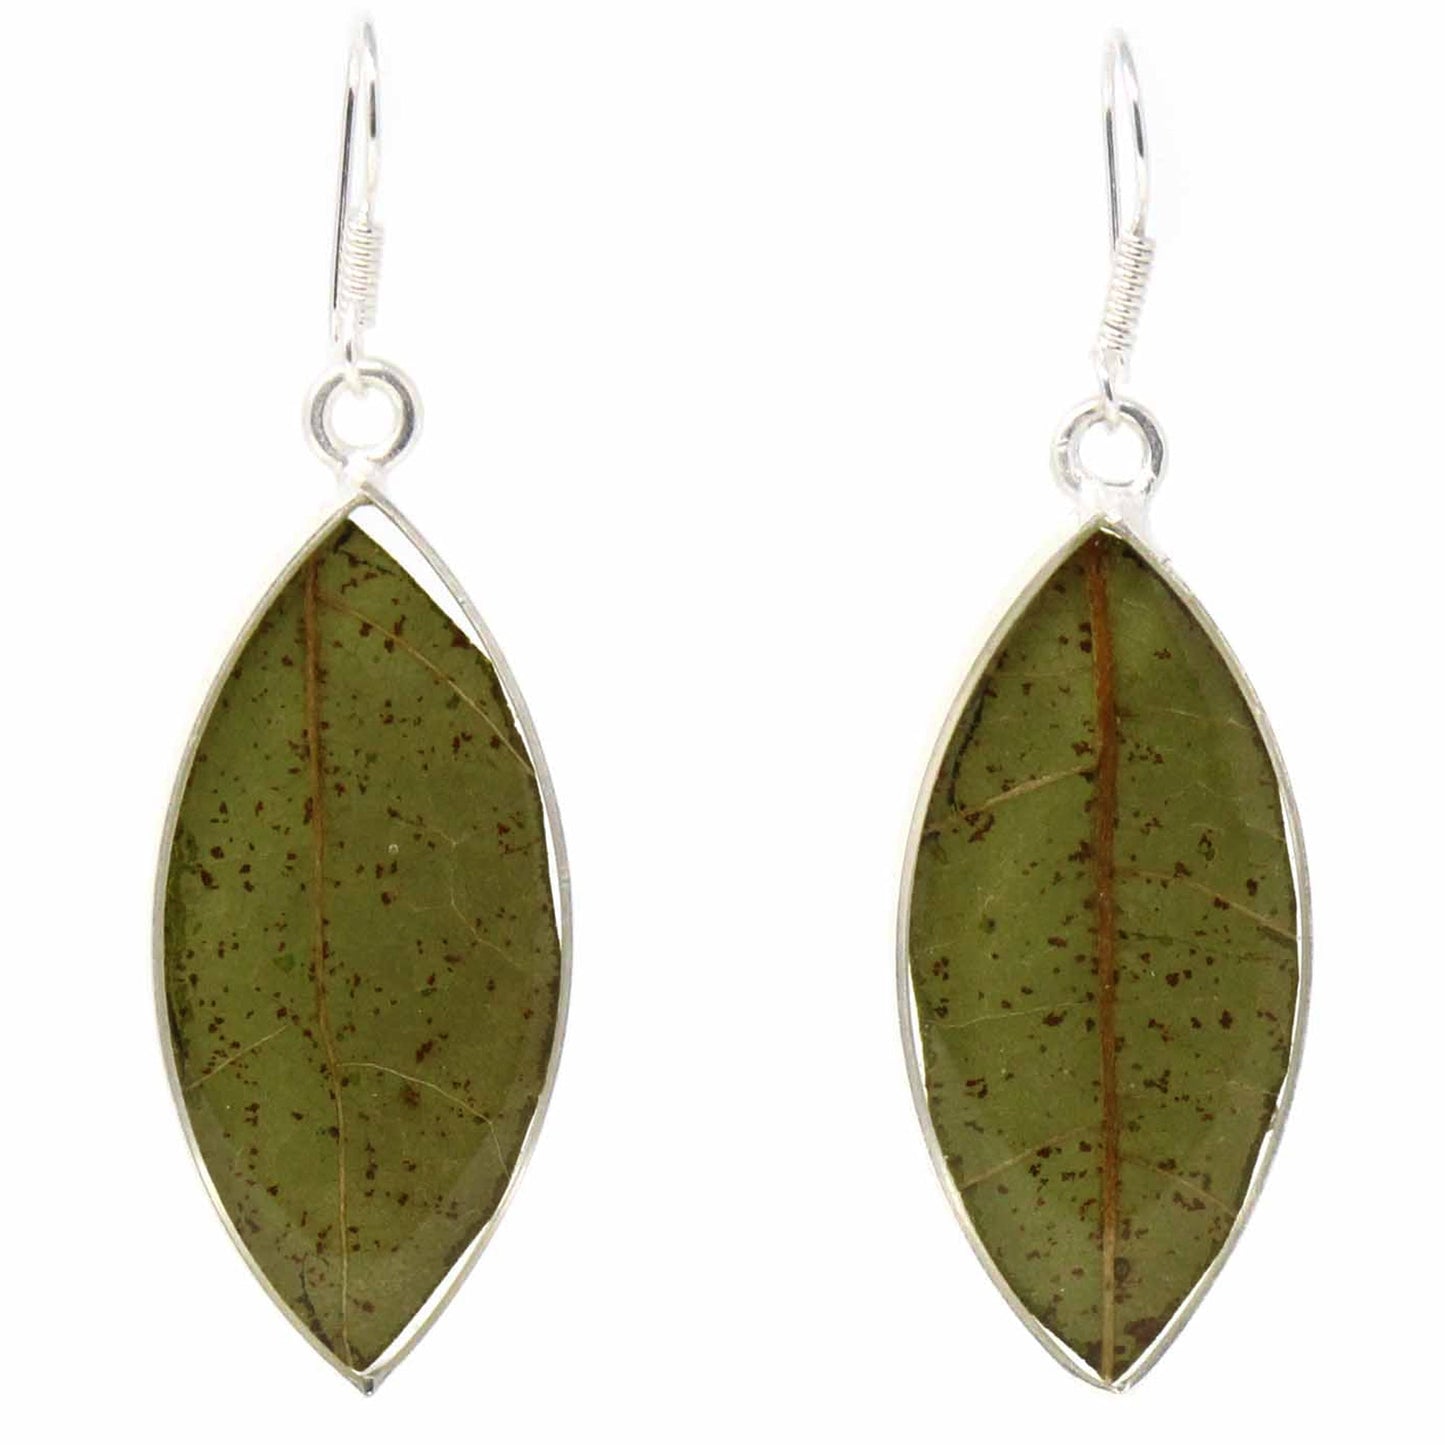 Earrings, Natural Leaf in Resin - Recetas Fair Trade